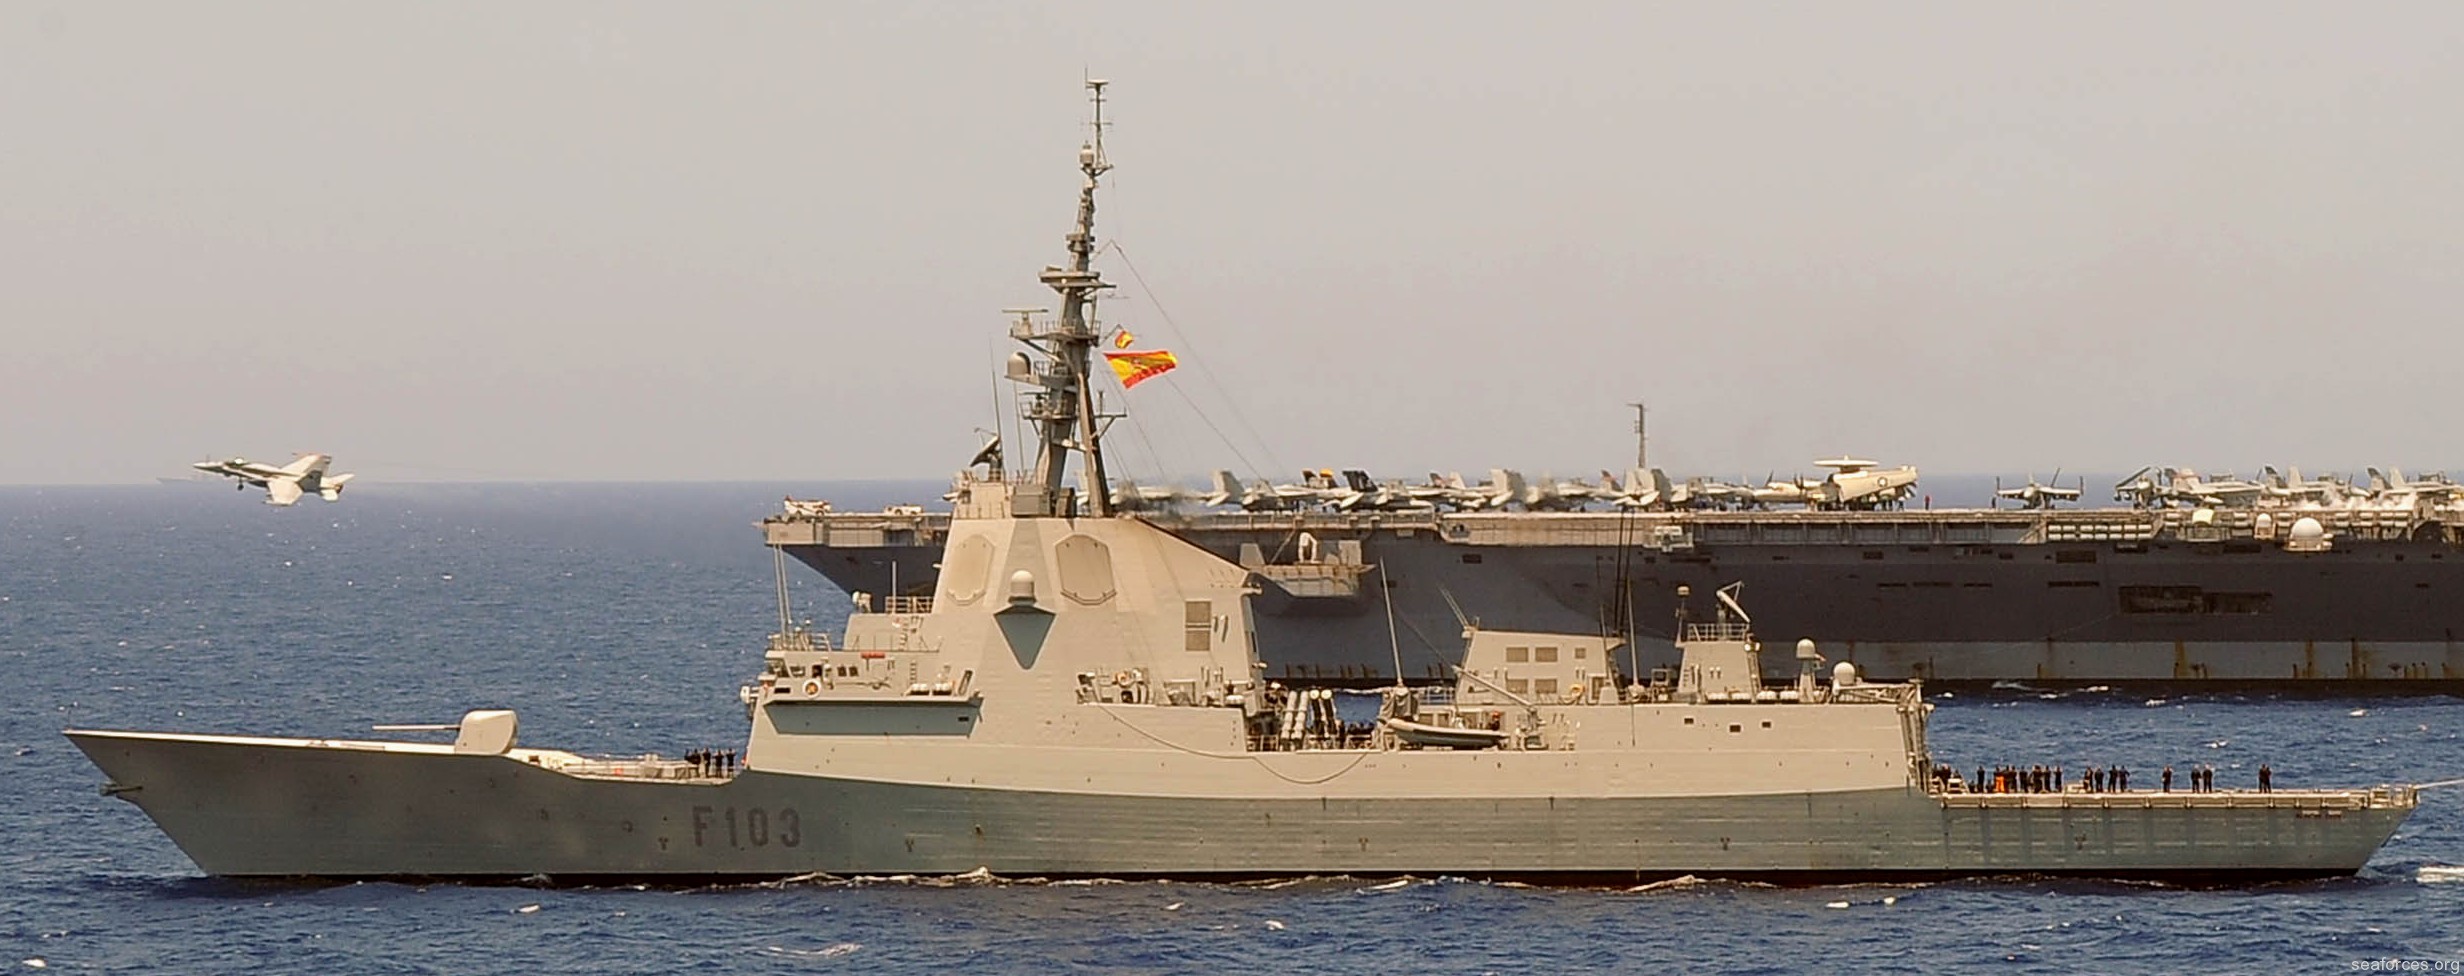 f-103 sps blas de lezo f100 bazan class guided missile frigate ddg spanish navy 09